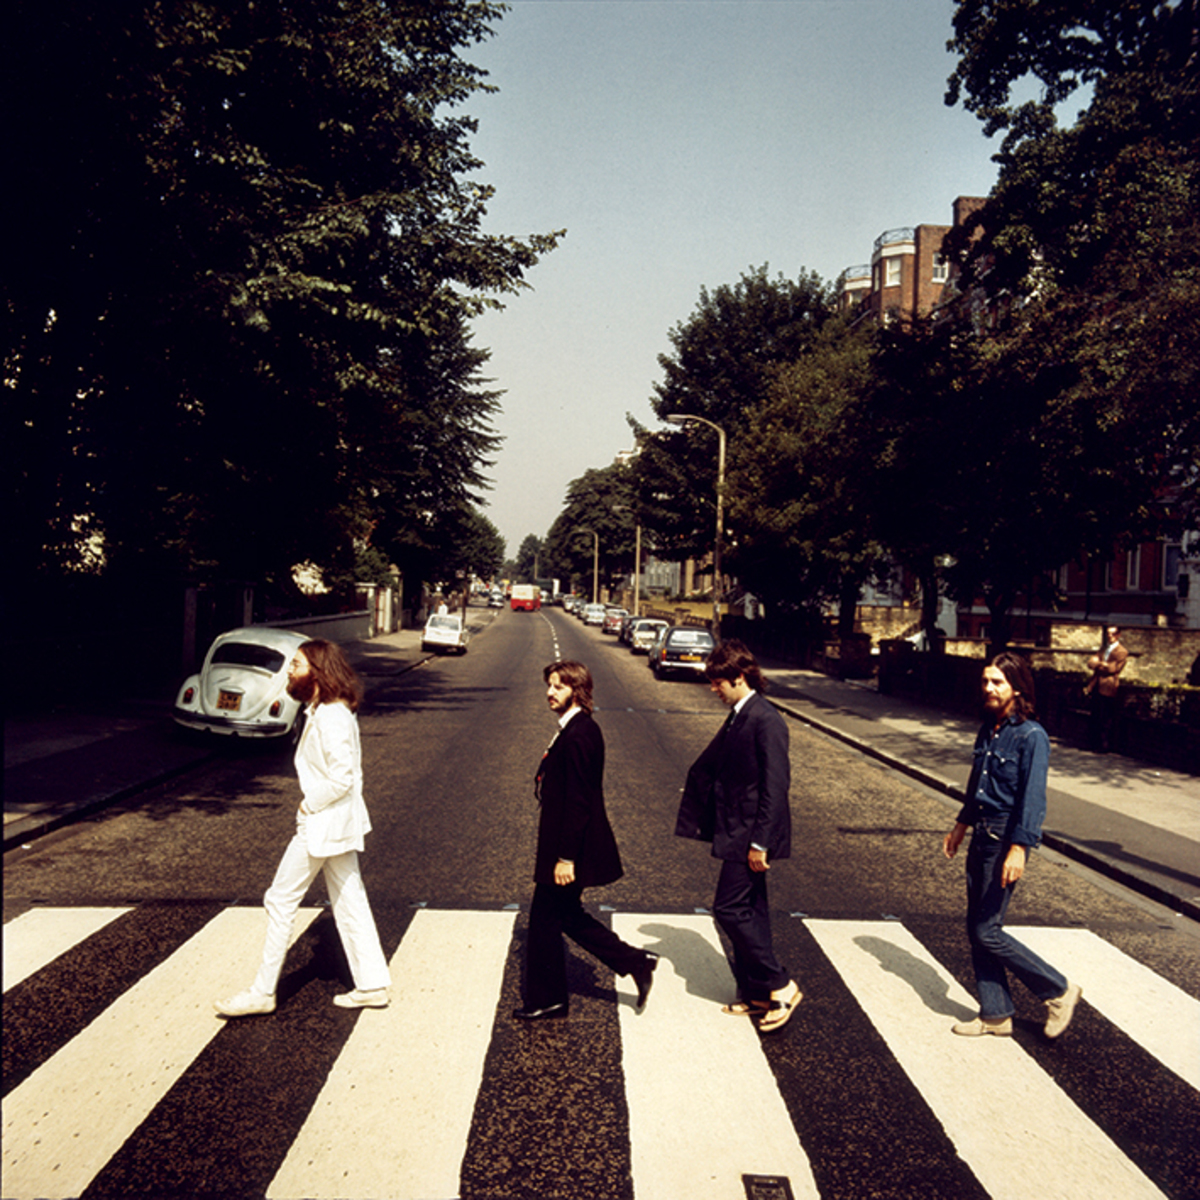 The Beatles – The Abbey Road Set  “Frame 2” by Iain Macmillan